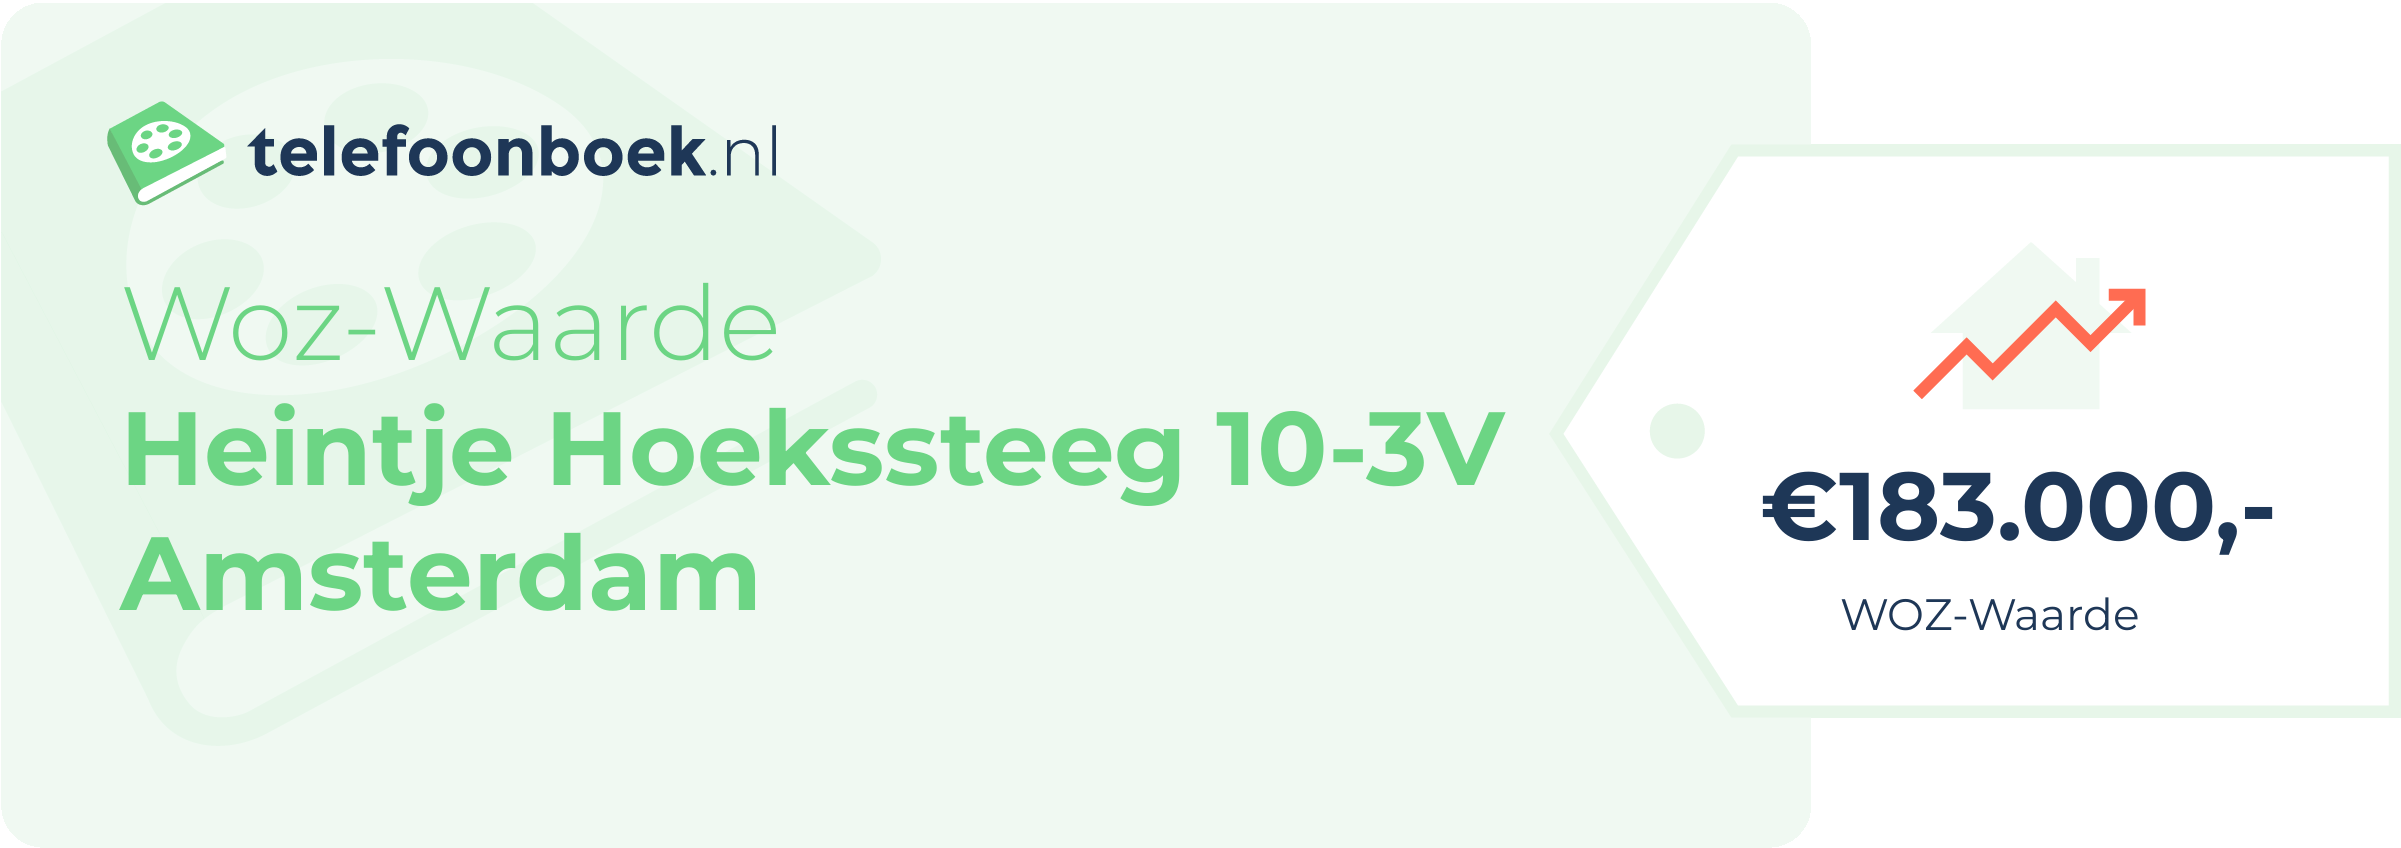 WOZ-waarde Heintje Hoekssteeg 10-3V Amsterdam